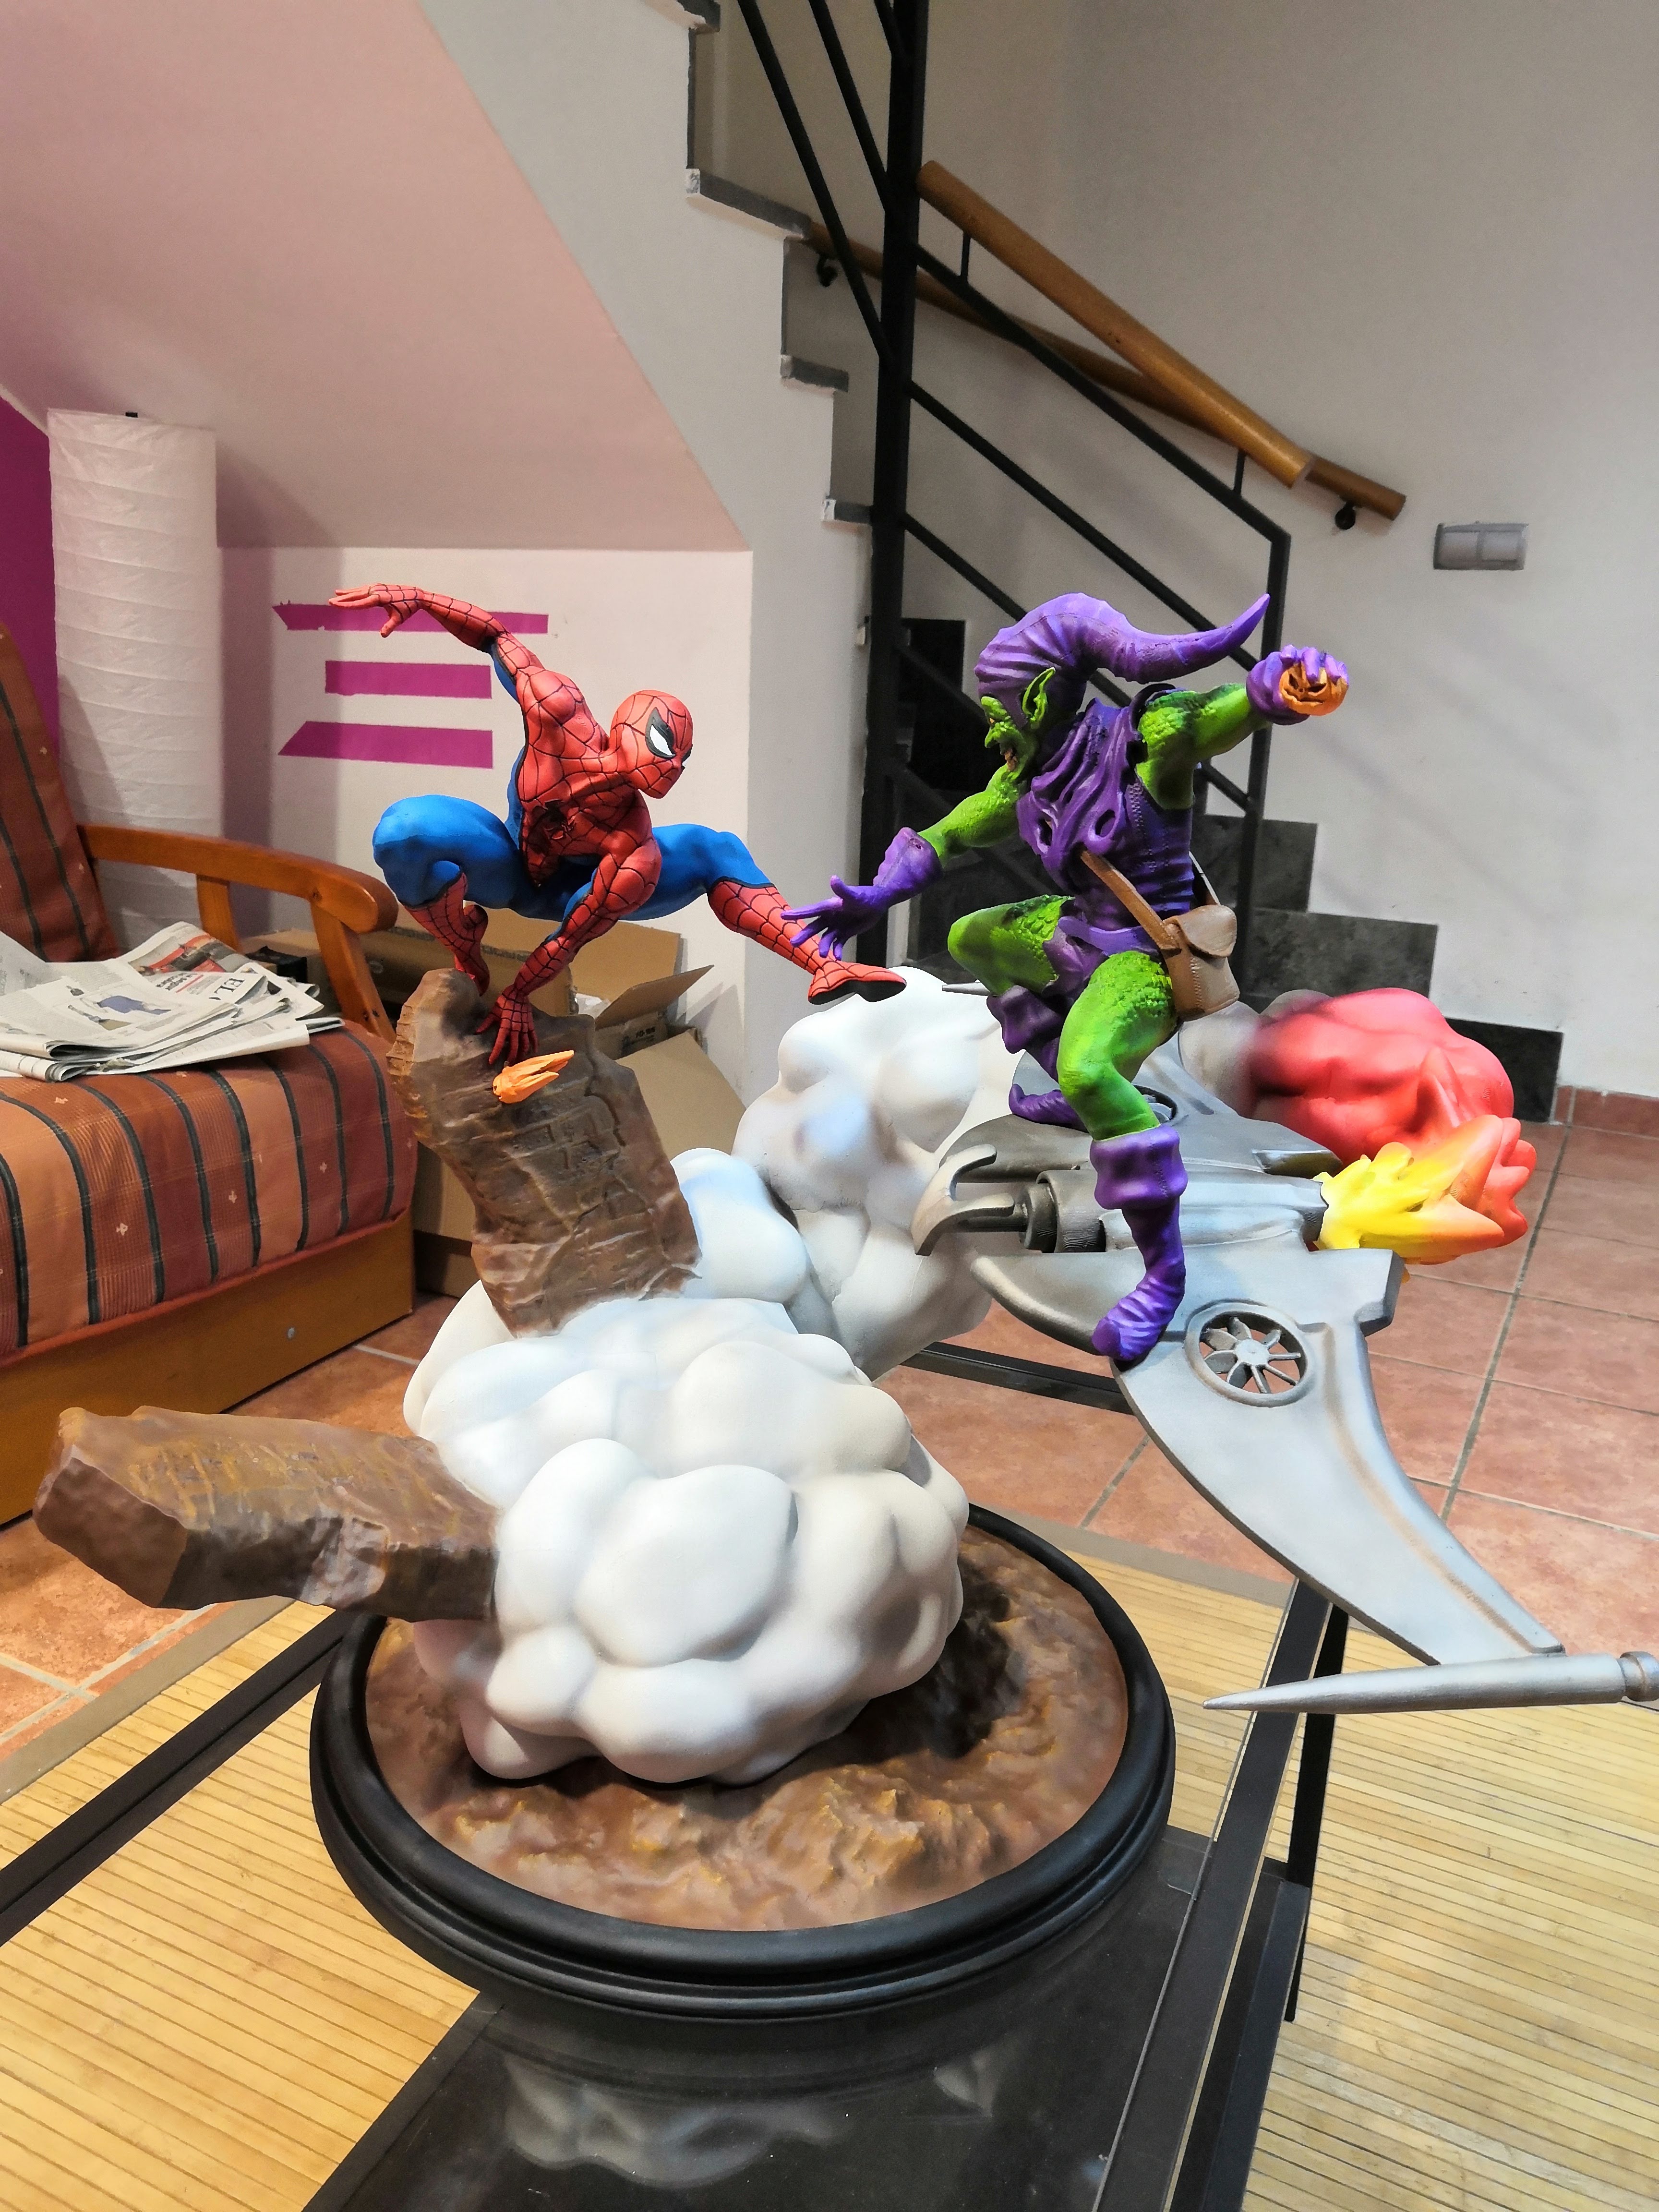 Spider-man Vs. Green Goblin diorama | Creative